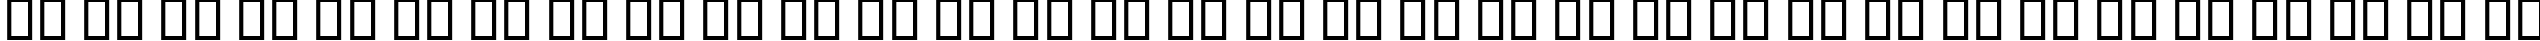 Пример написания русского алфавита шрифтом B Mashhad Bold